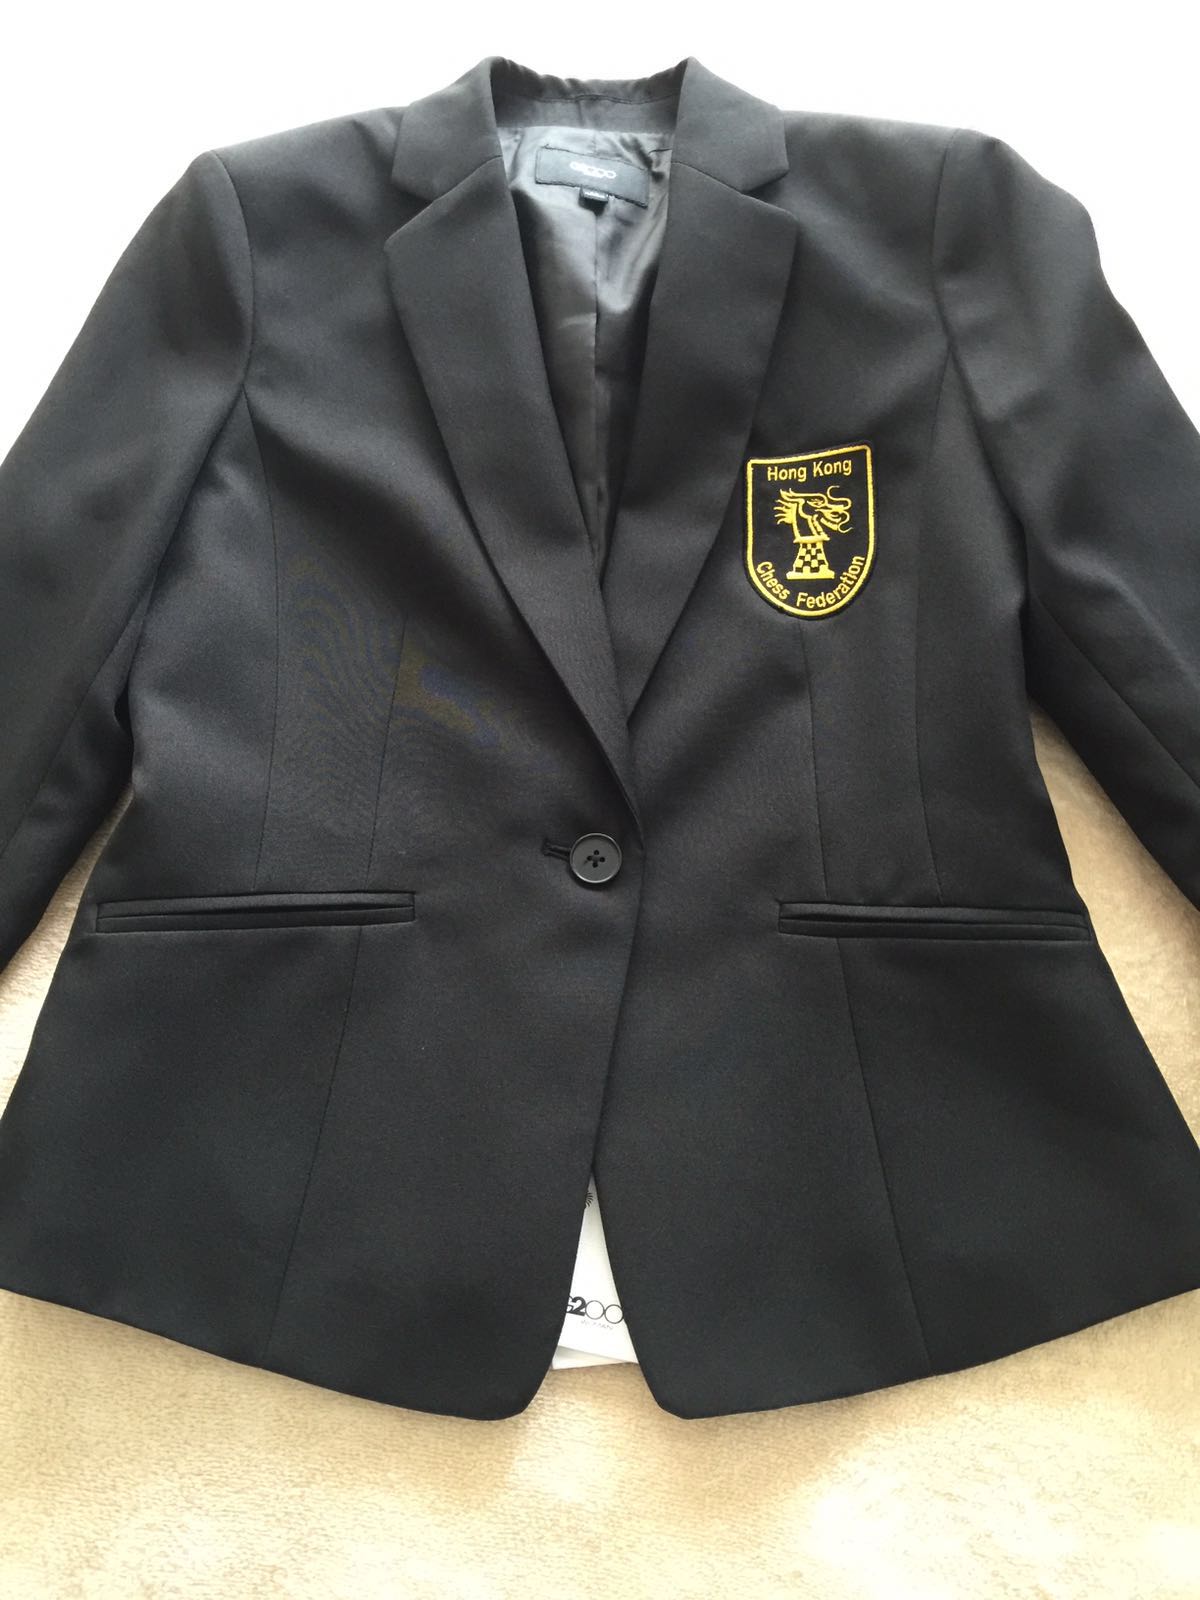 hong-kong-chess-federation-jacket-uniform